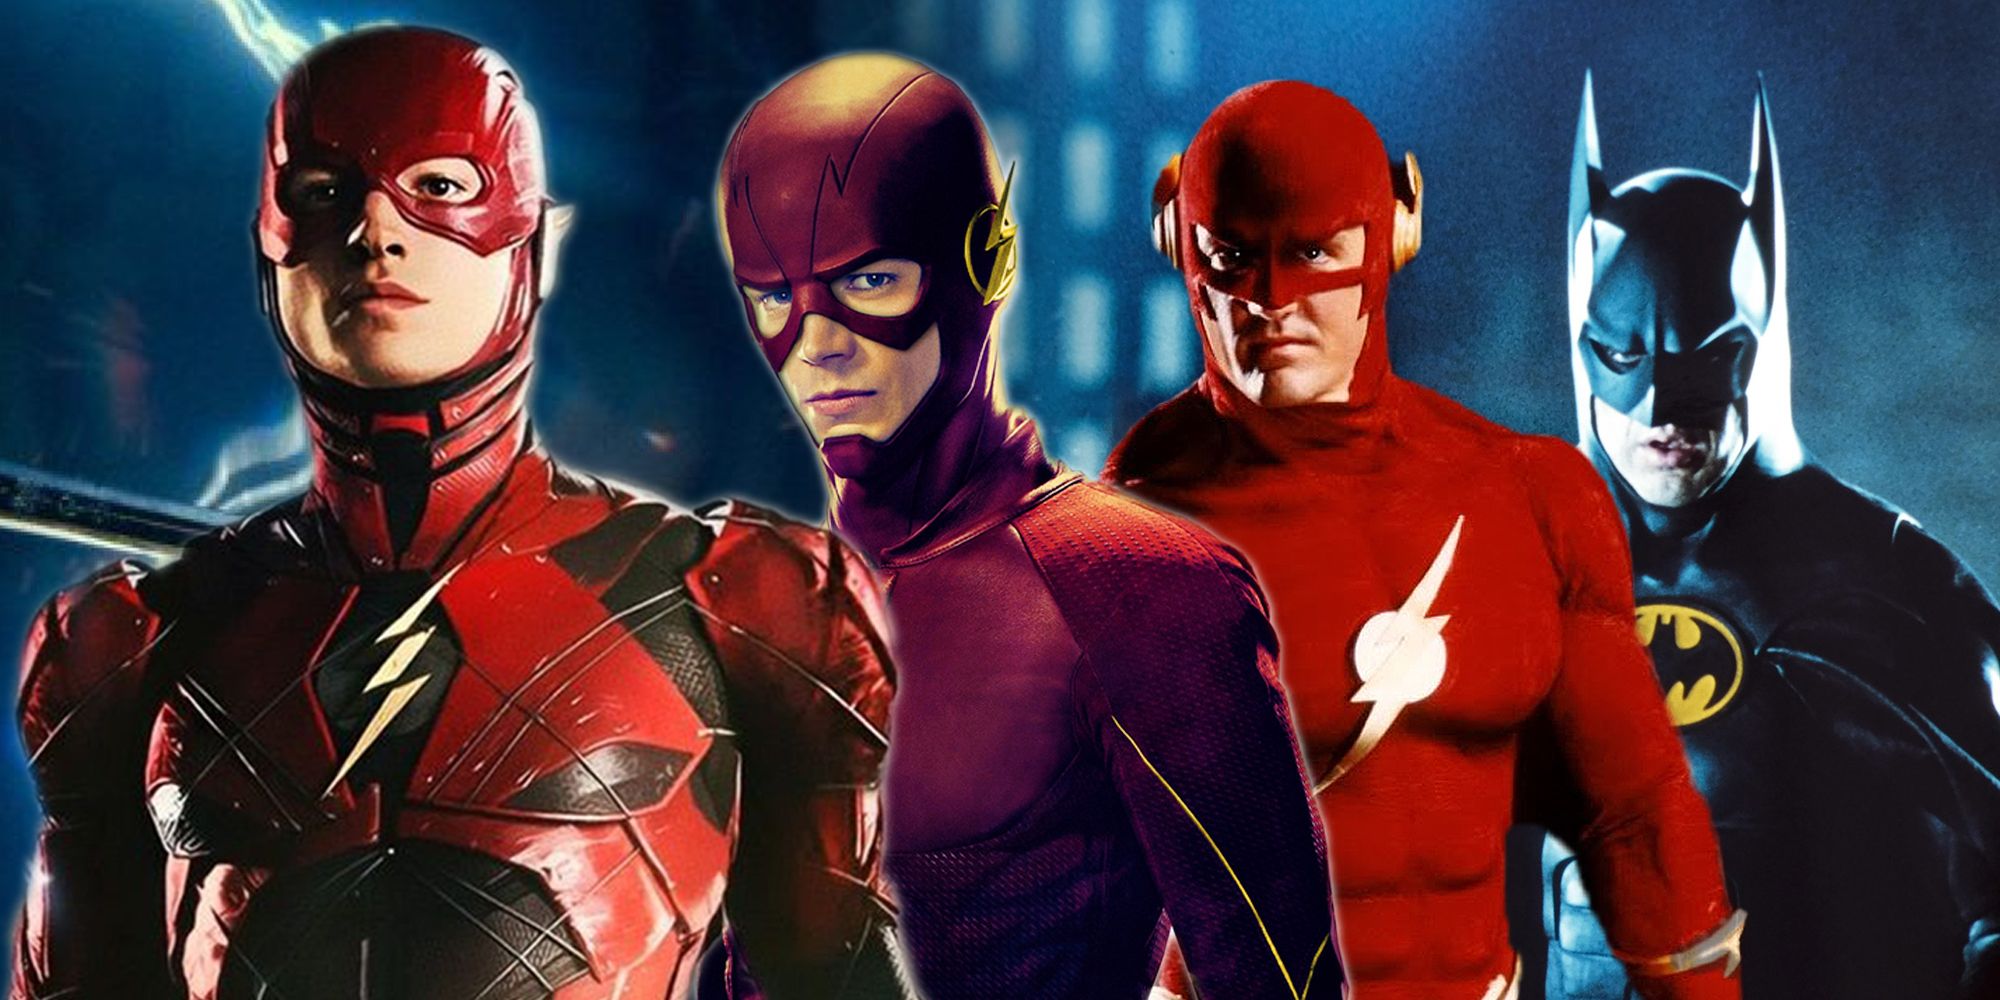 Arrowverse Multiverse in The Flash 2022 Movie